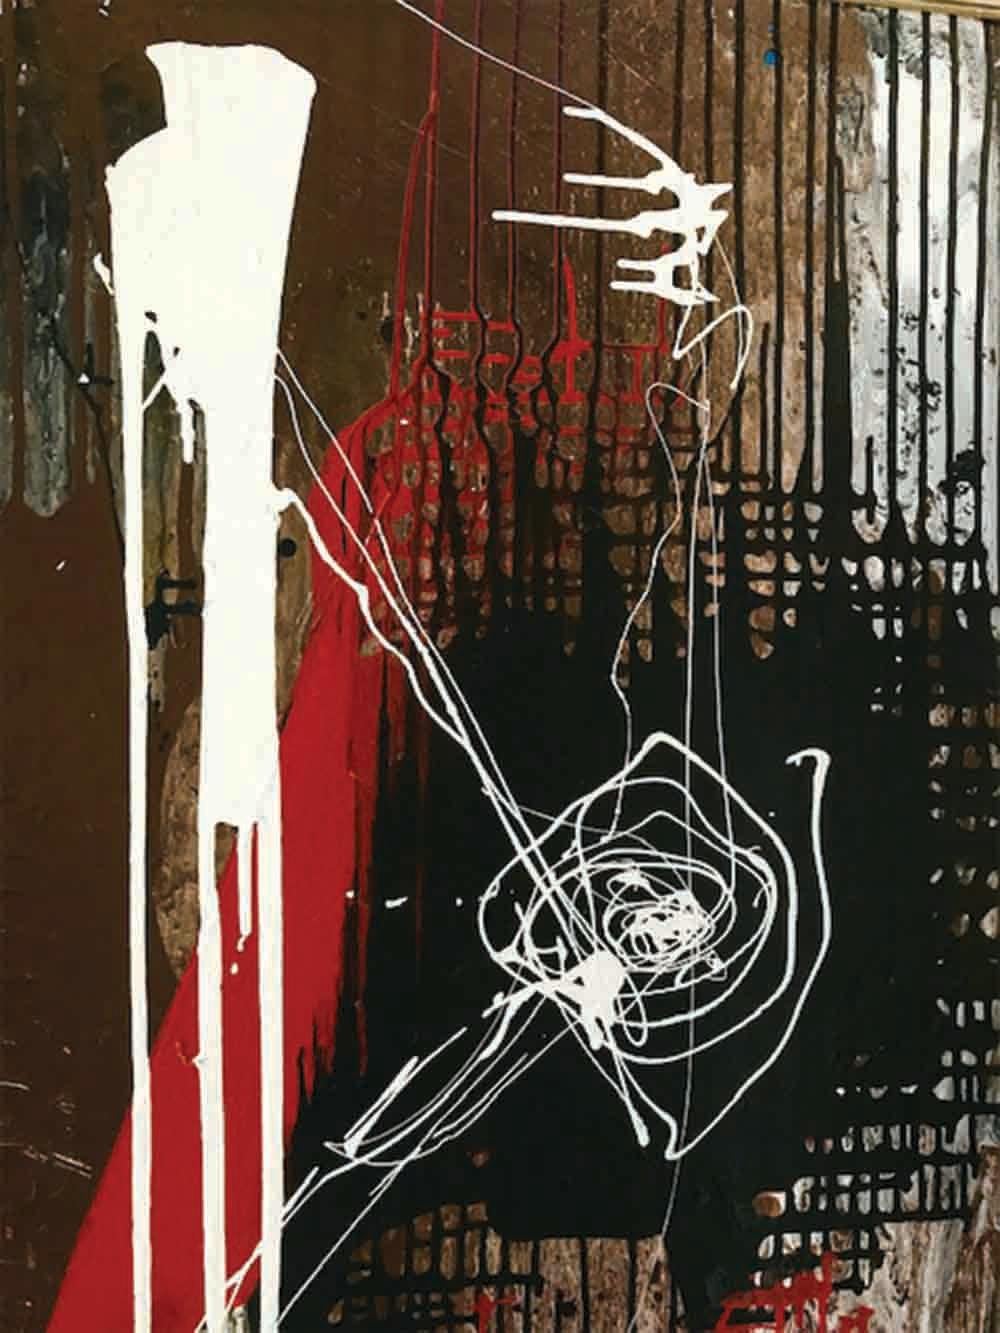 Ron Kingsbury Abstract Painting - "Spirits"